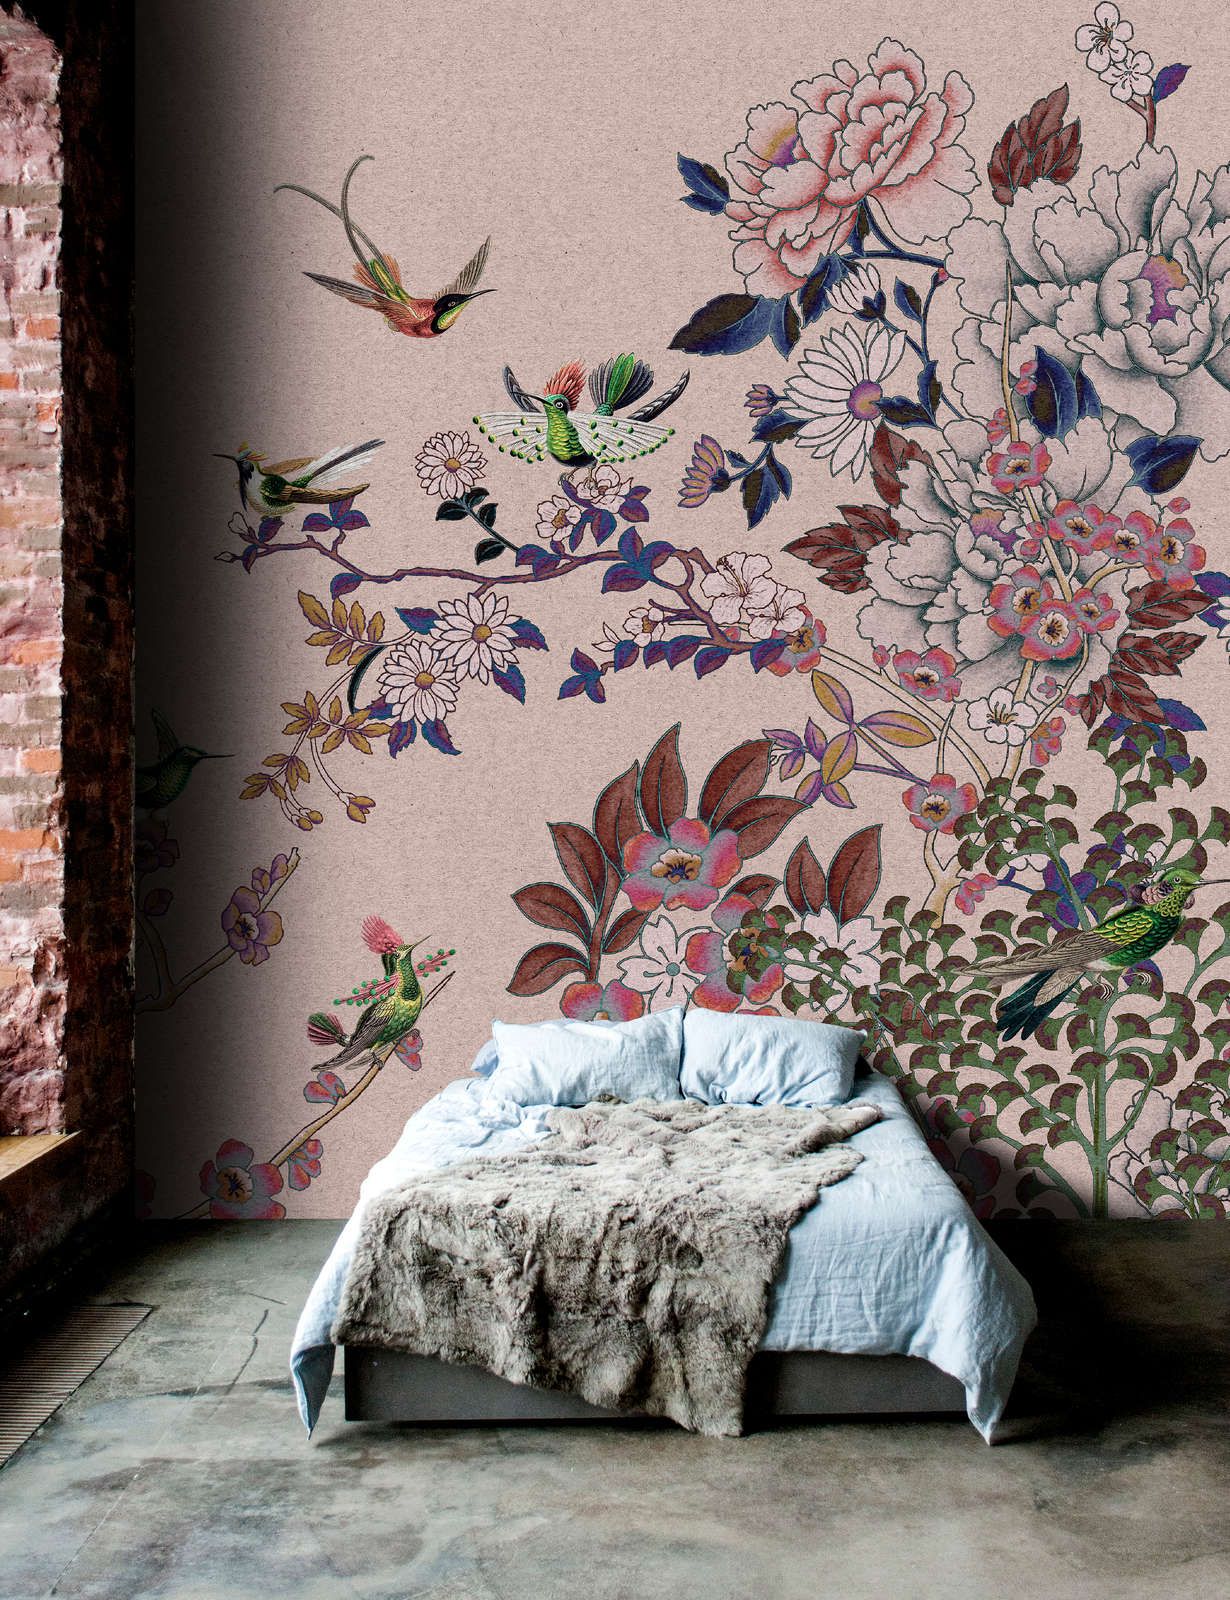             Photo wallpaper »madras 2« - Rose-coloured blossom motif with hummingbirds on kraft paper texture - Matt, smooth non-woven fabric
        